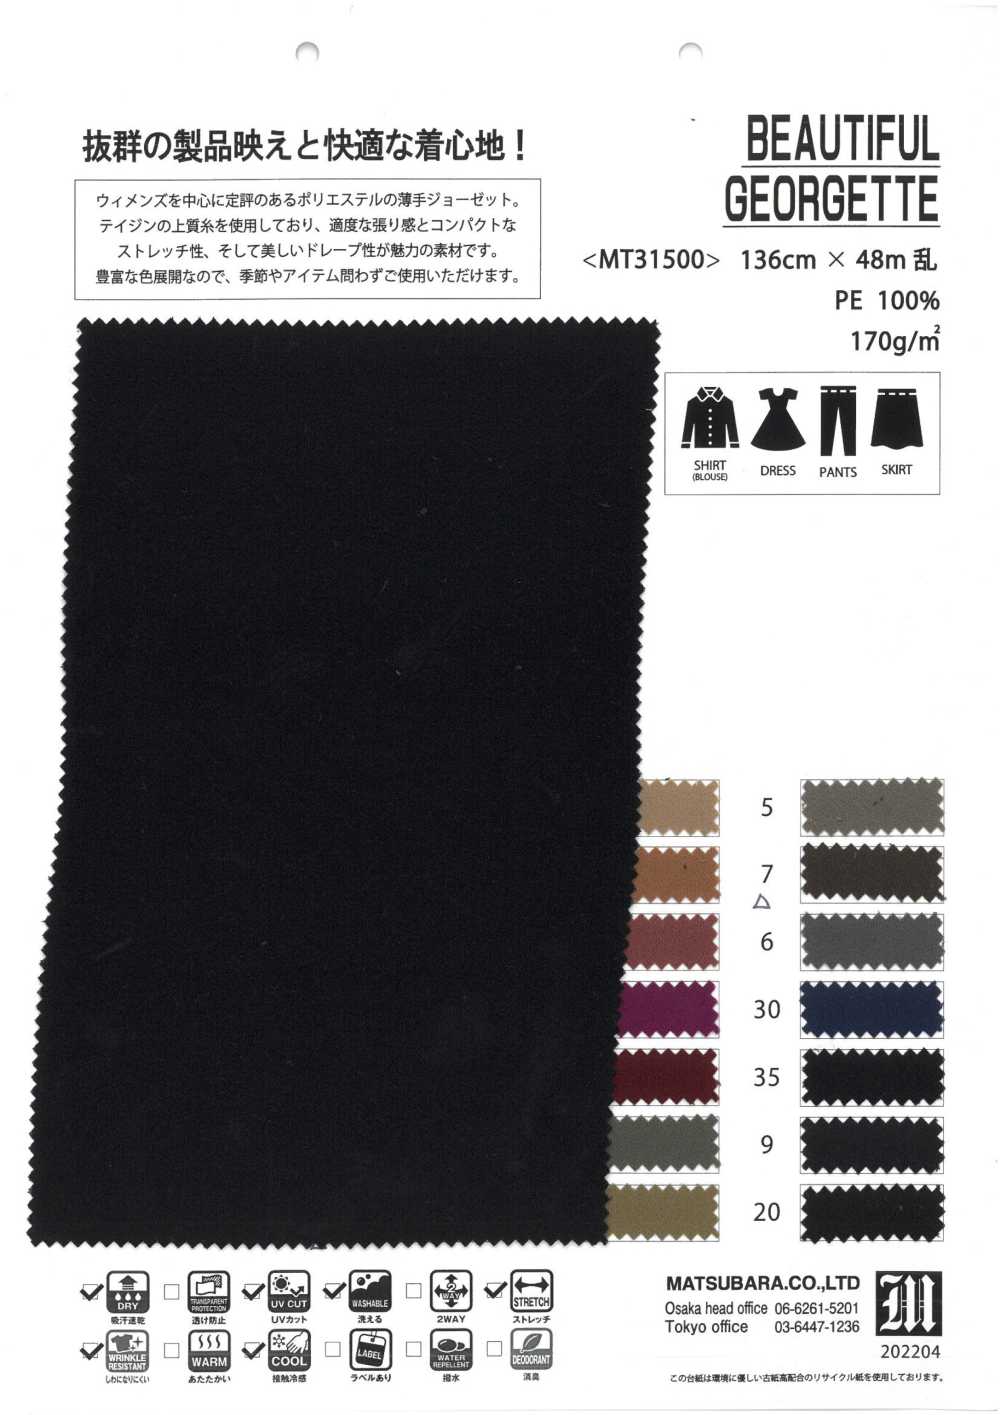 MT31500 HERMOSA GEOGETA[Fabrica Textil] Matsubara